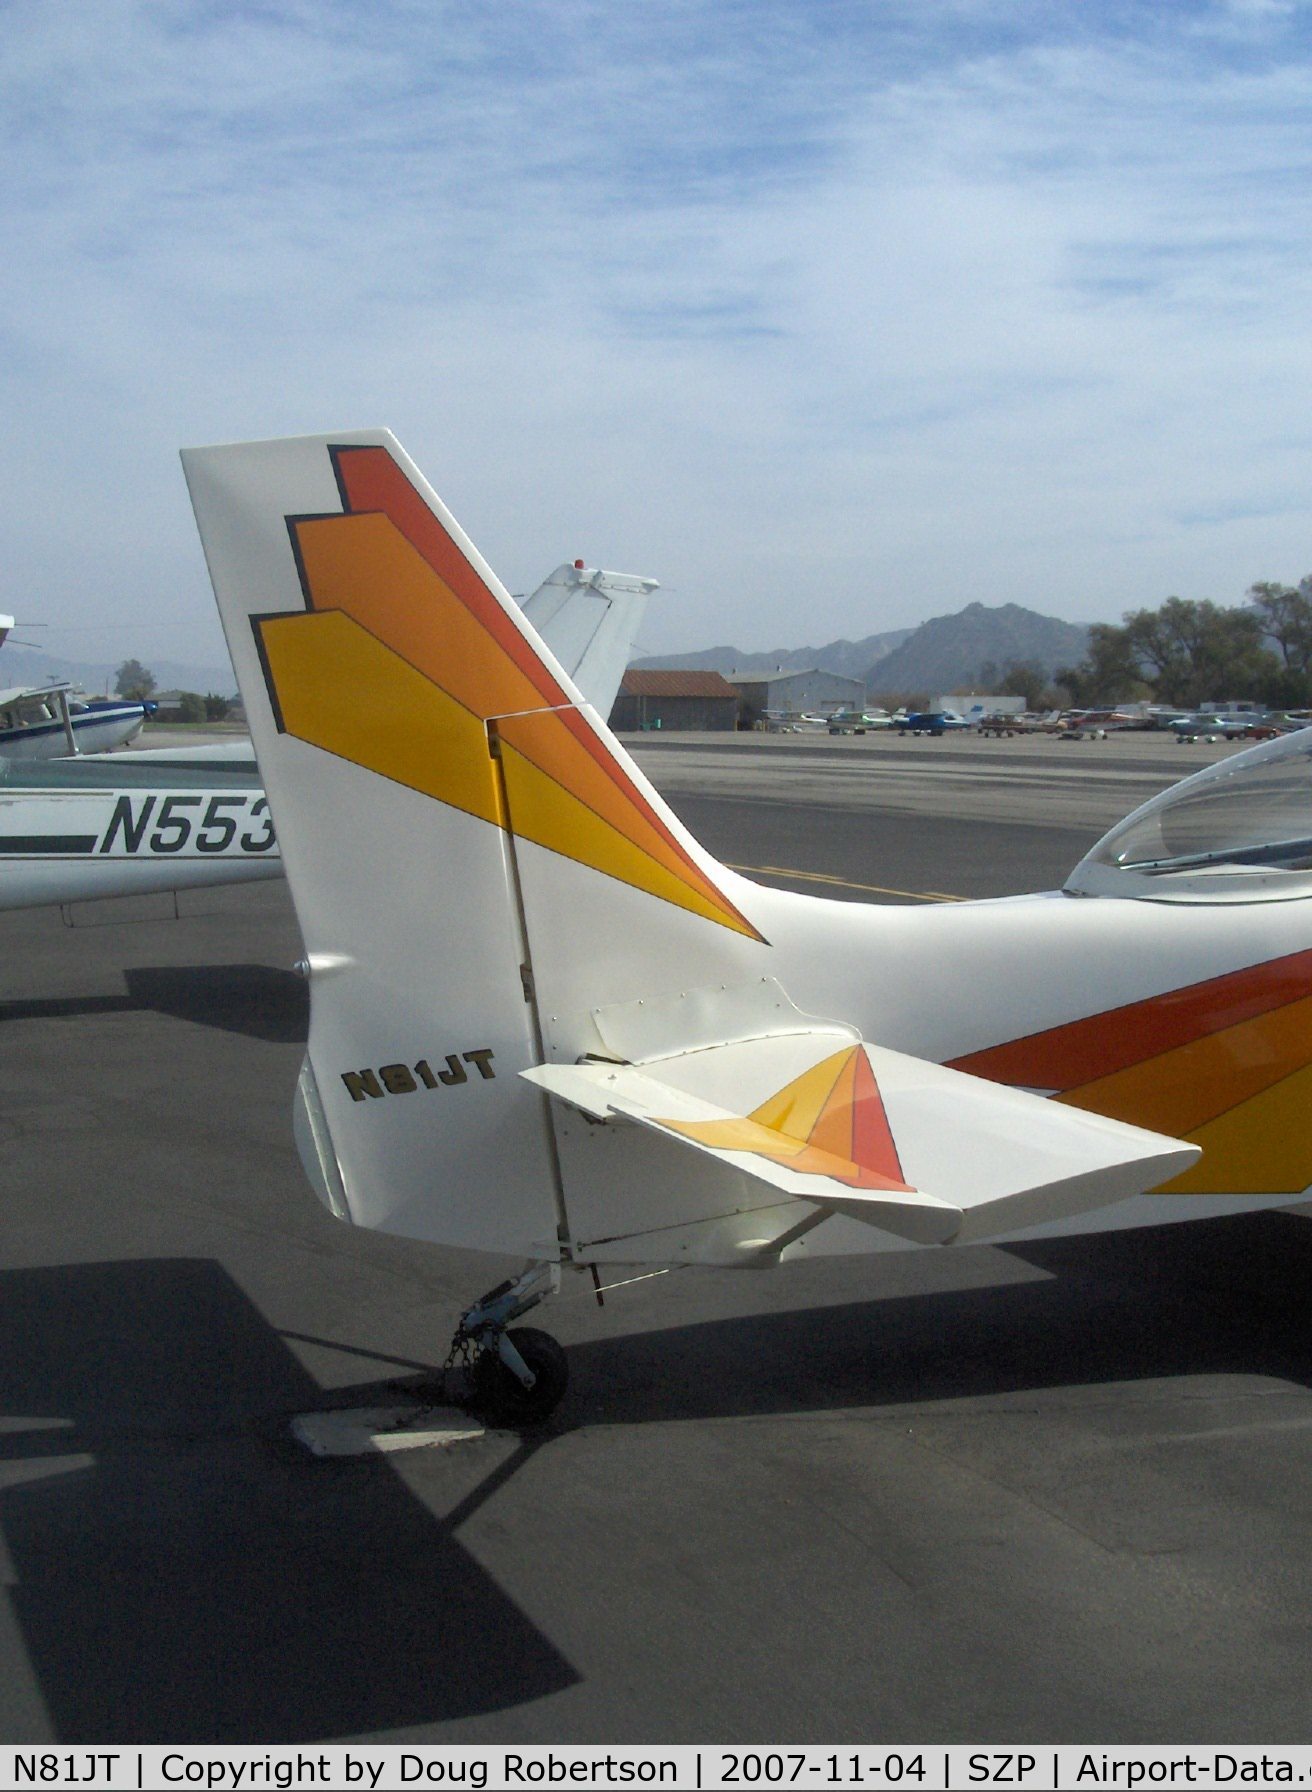 N81JT, 1982 Jurca MJ-5 Sirocco C/N 50, 1982 Tumilowicz MJ-5 SIROCCO, Lycoming A&C IO-360 220 Hp, tall tail with balanced rudder